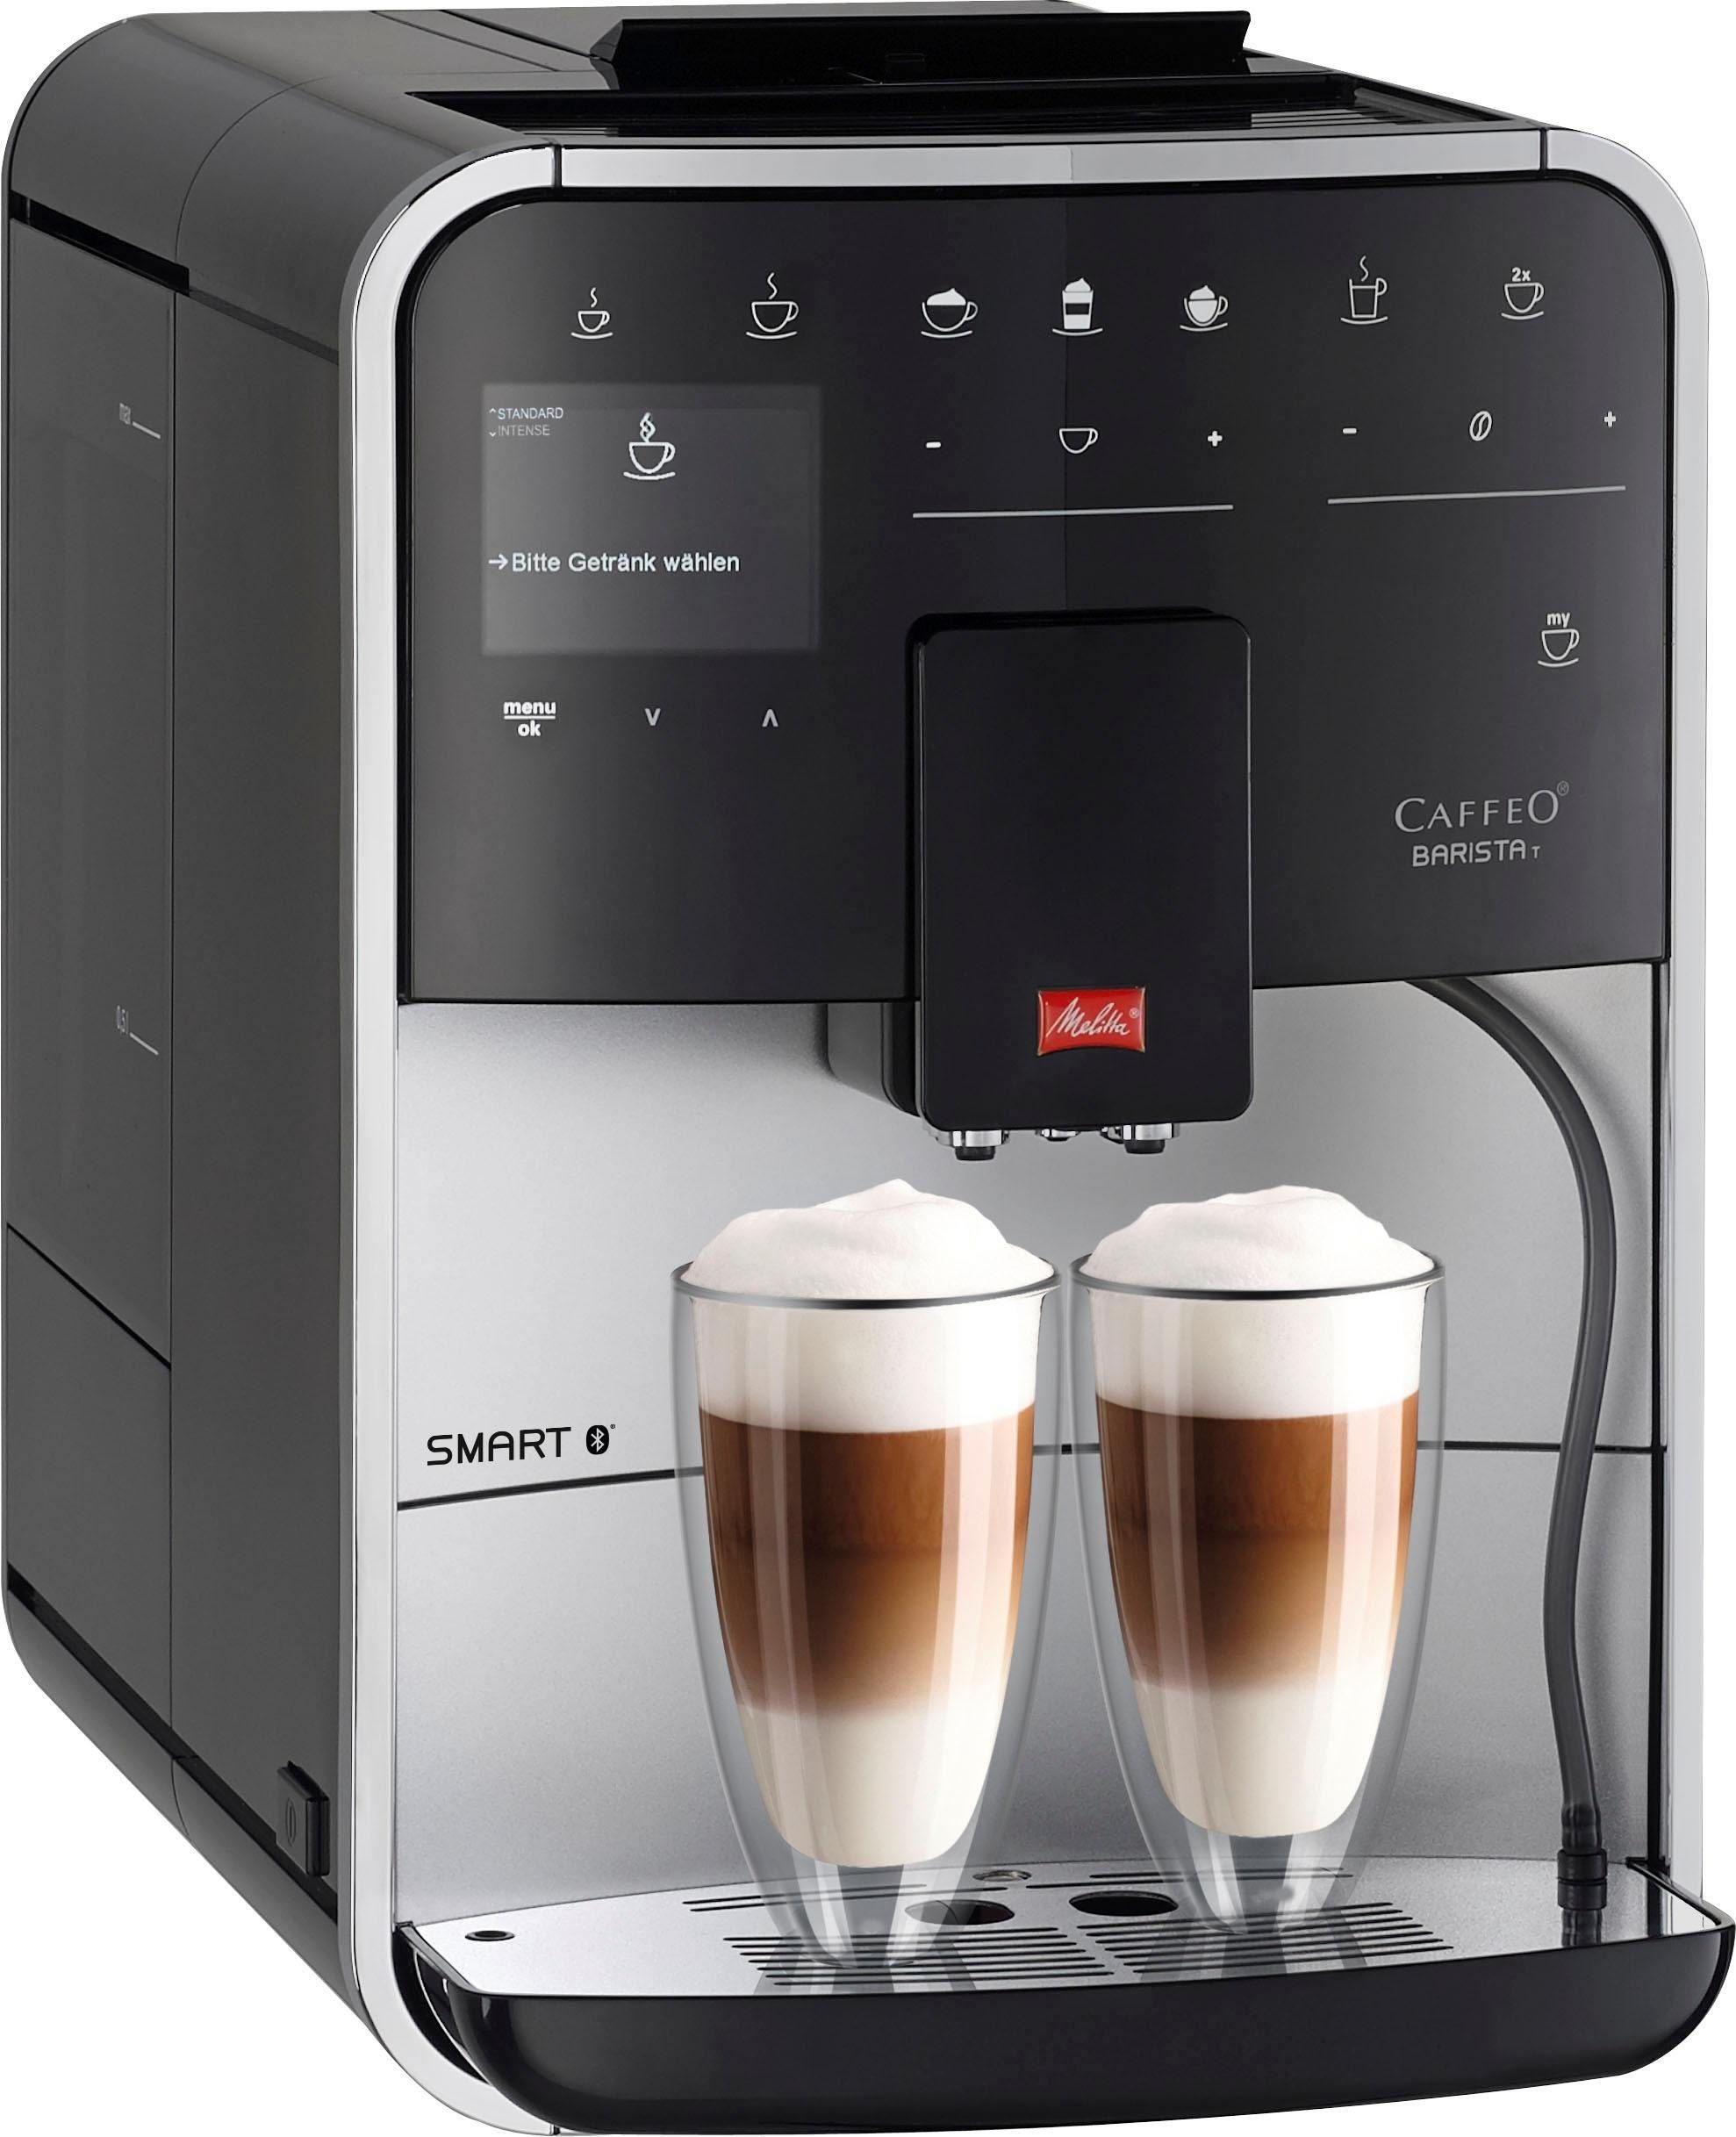 Melitta Kaffeevollautomat CAFFEO Barista T Smart® F831-101, silberfarben  online kaufen | OTTO